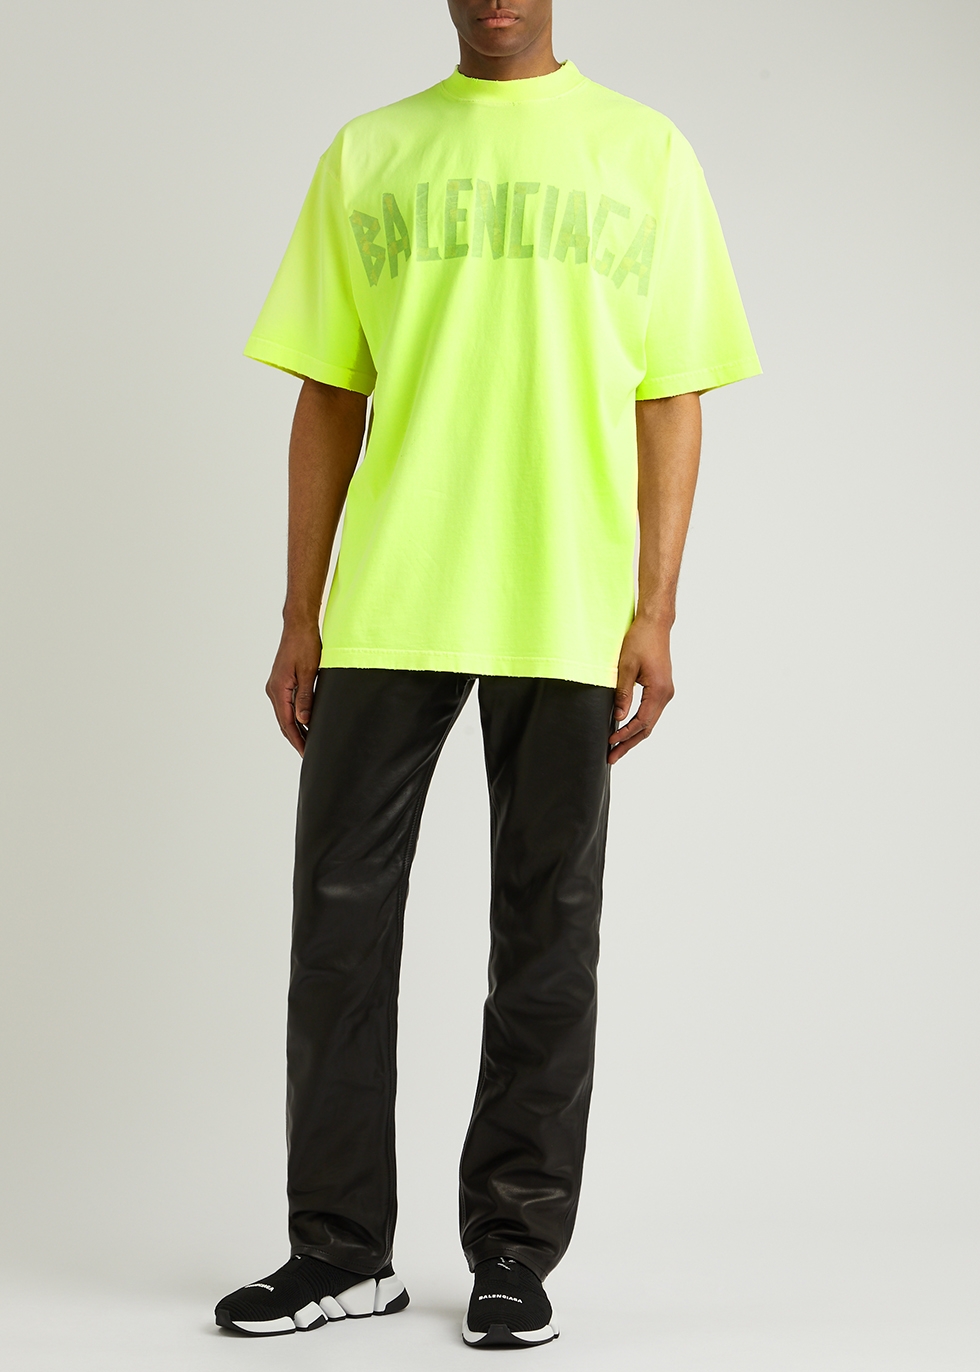 Balenciaga Crew Oversized TShirt Neon Size L  eBay